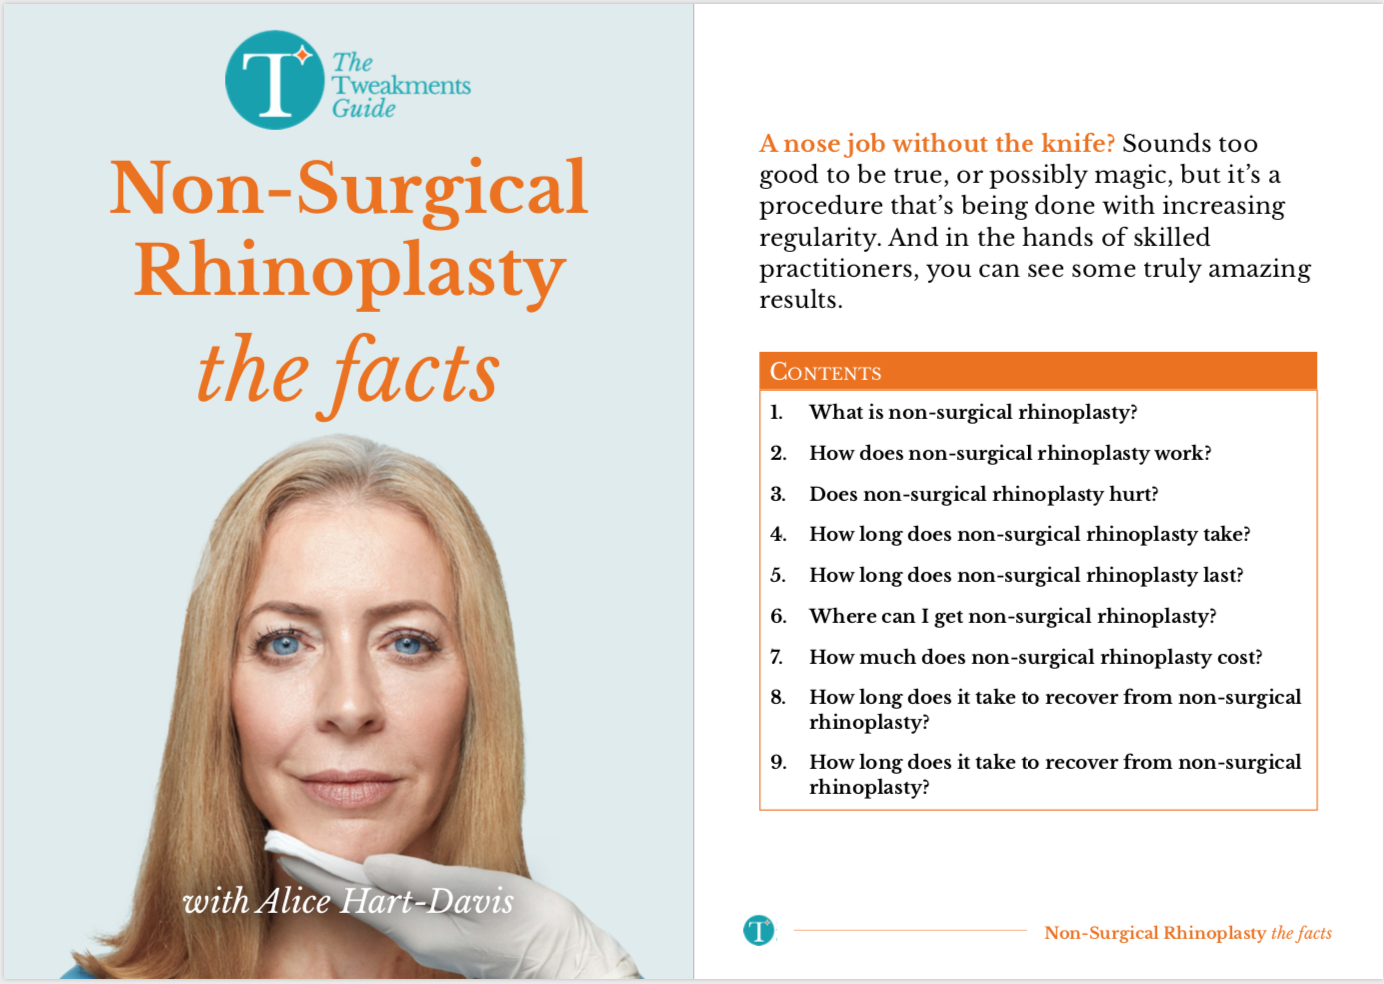 Non-surgical rhinoplasty factsheet